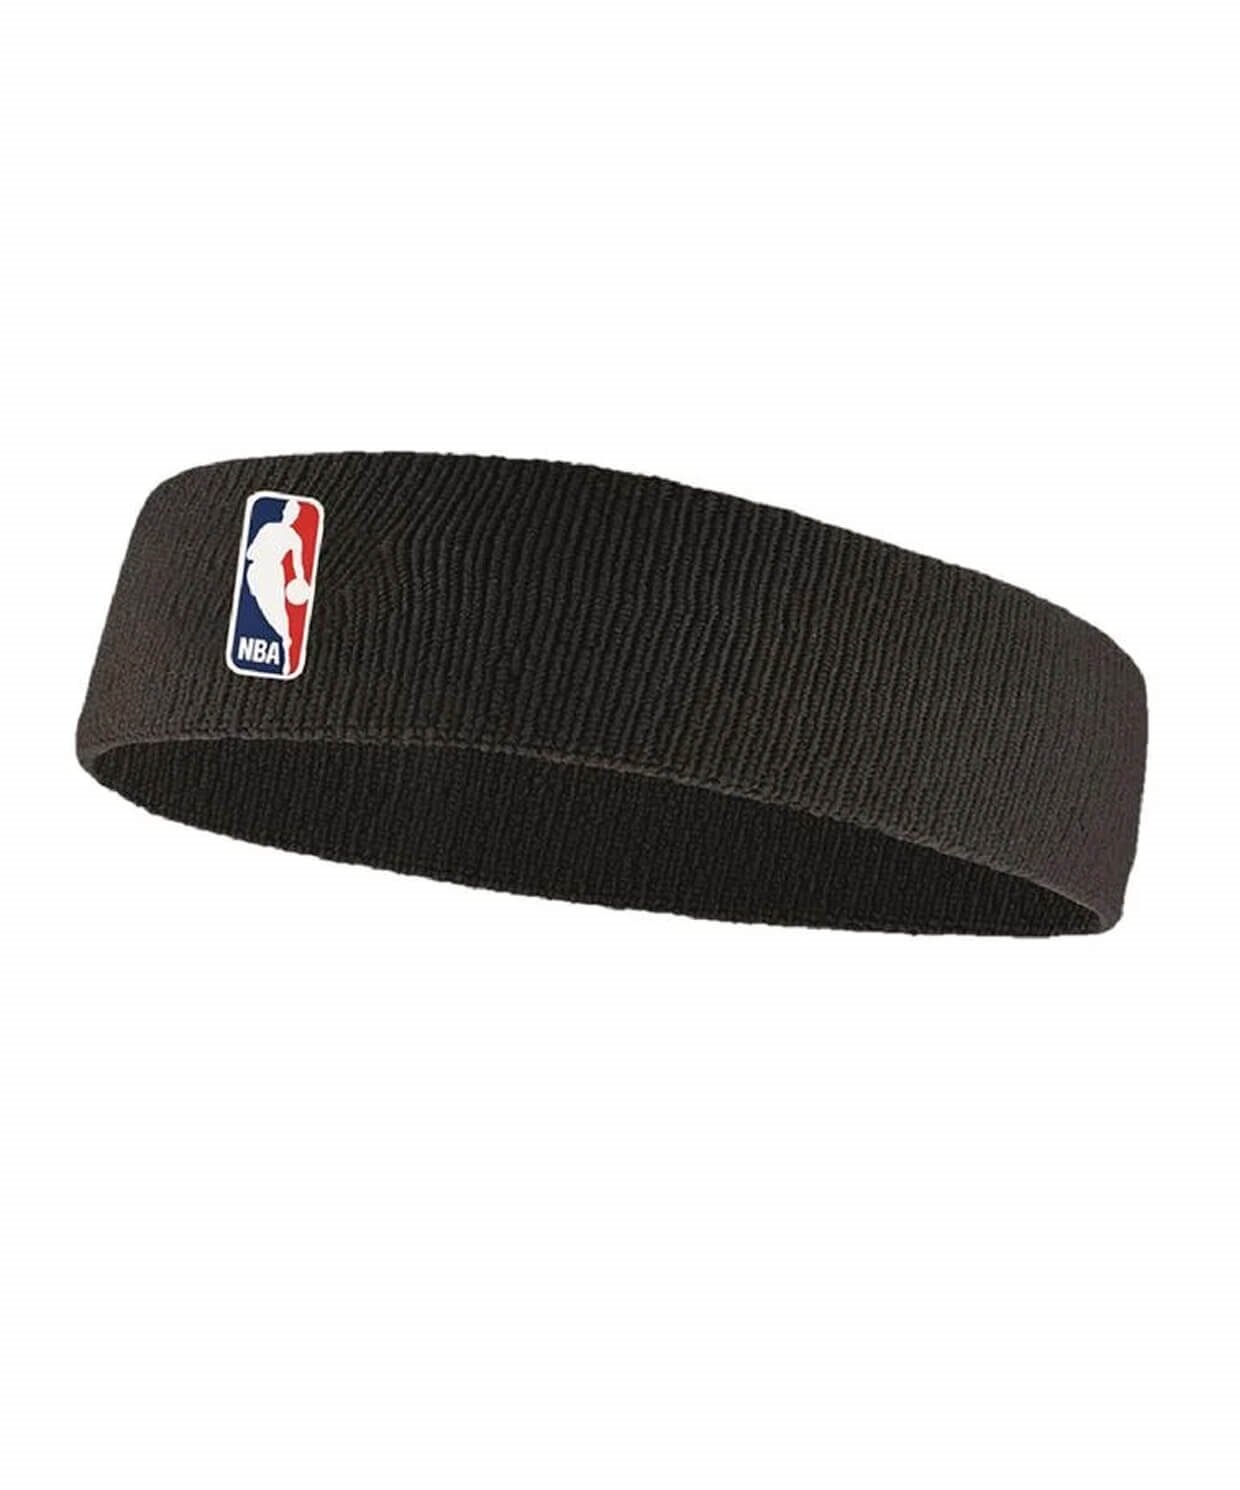 Nike Headband Nba Black